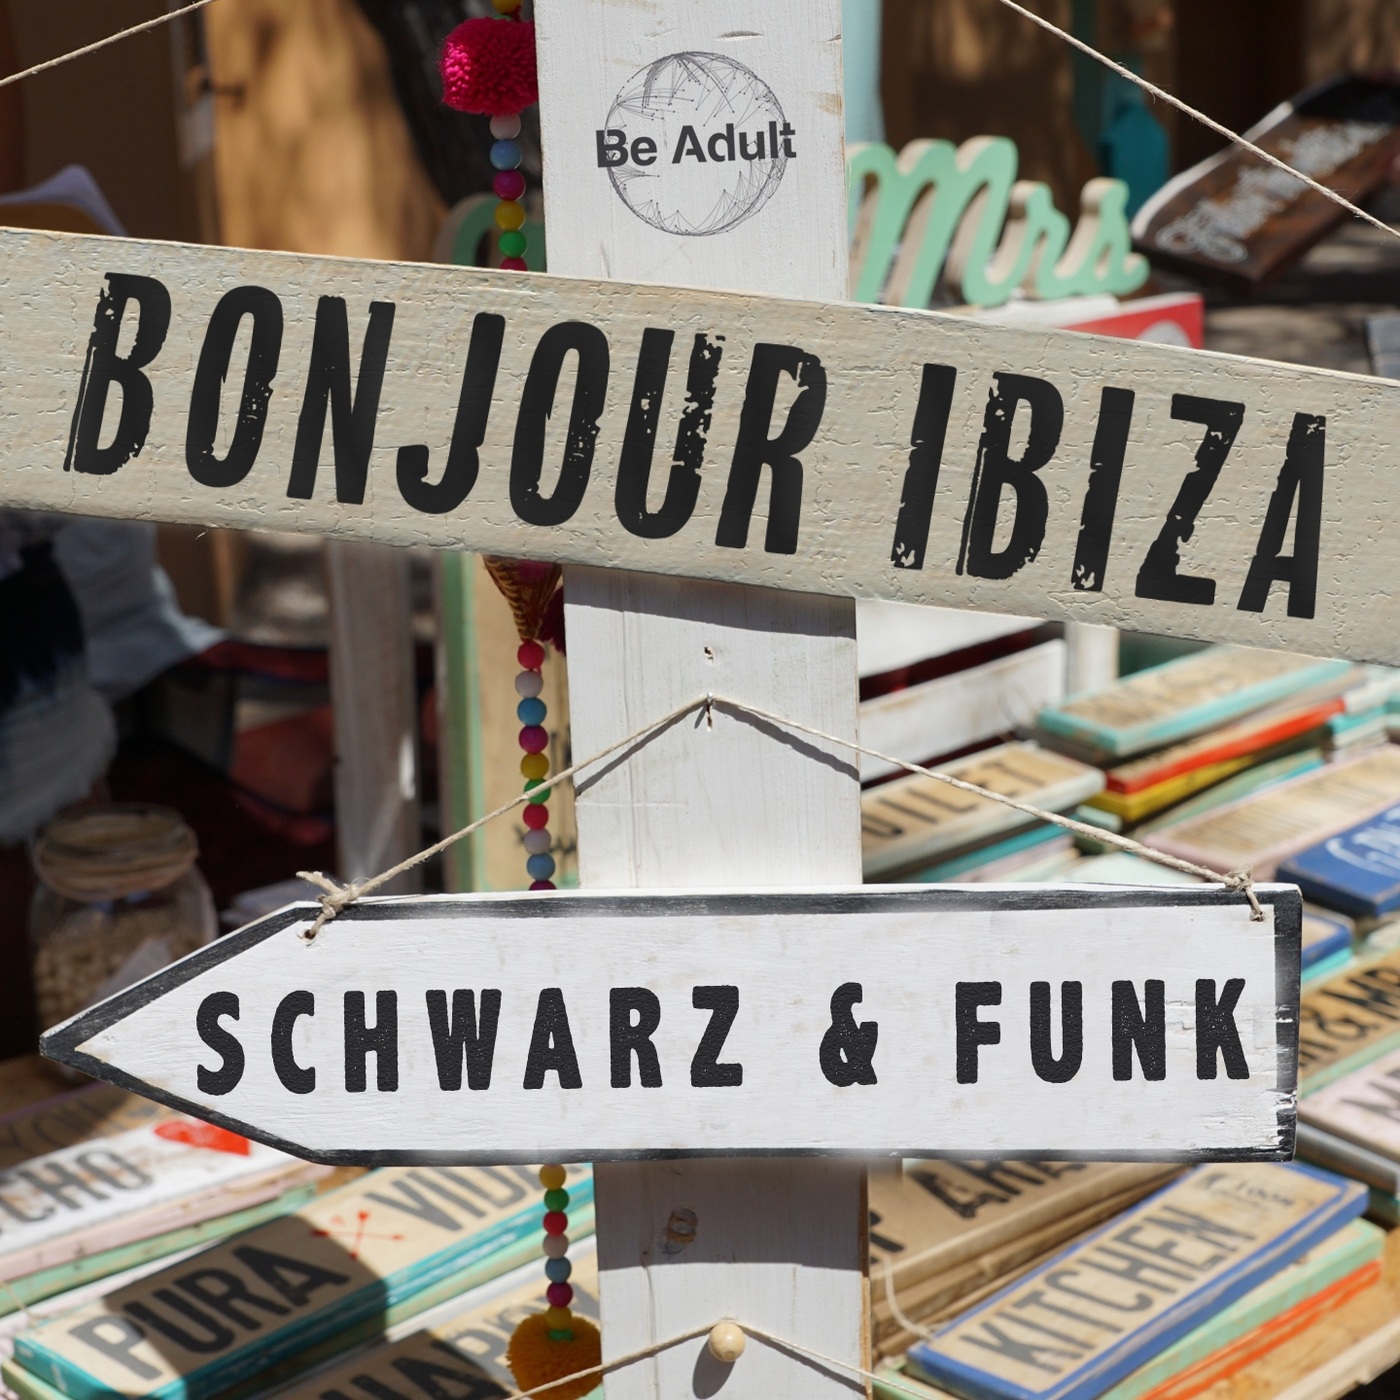 Schwarz & Funk - Bonjour ibiza / Be Adult Music